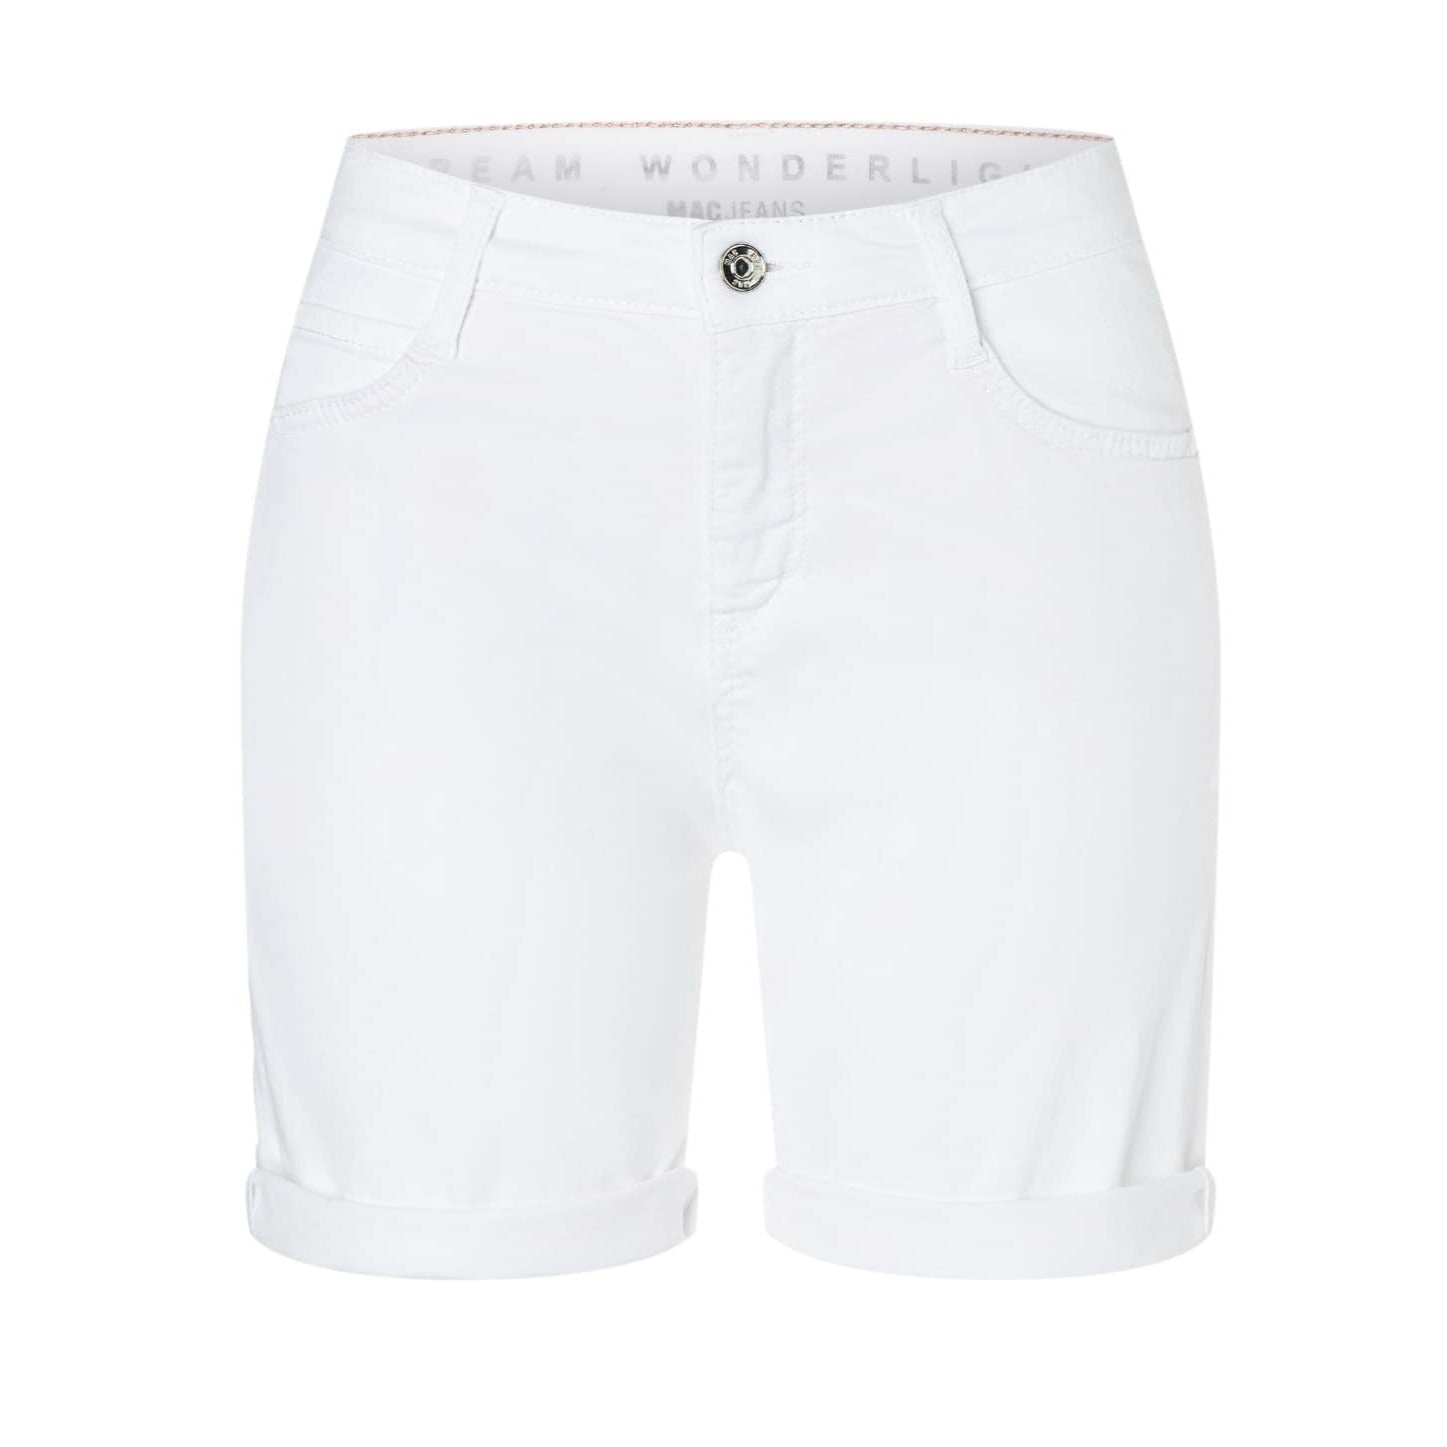 MAC W Dream Shorty Shorts White